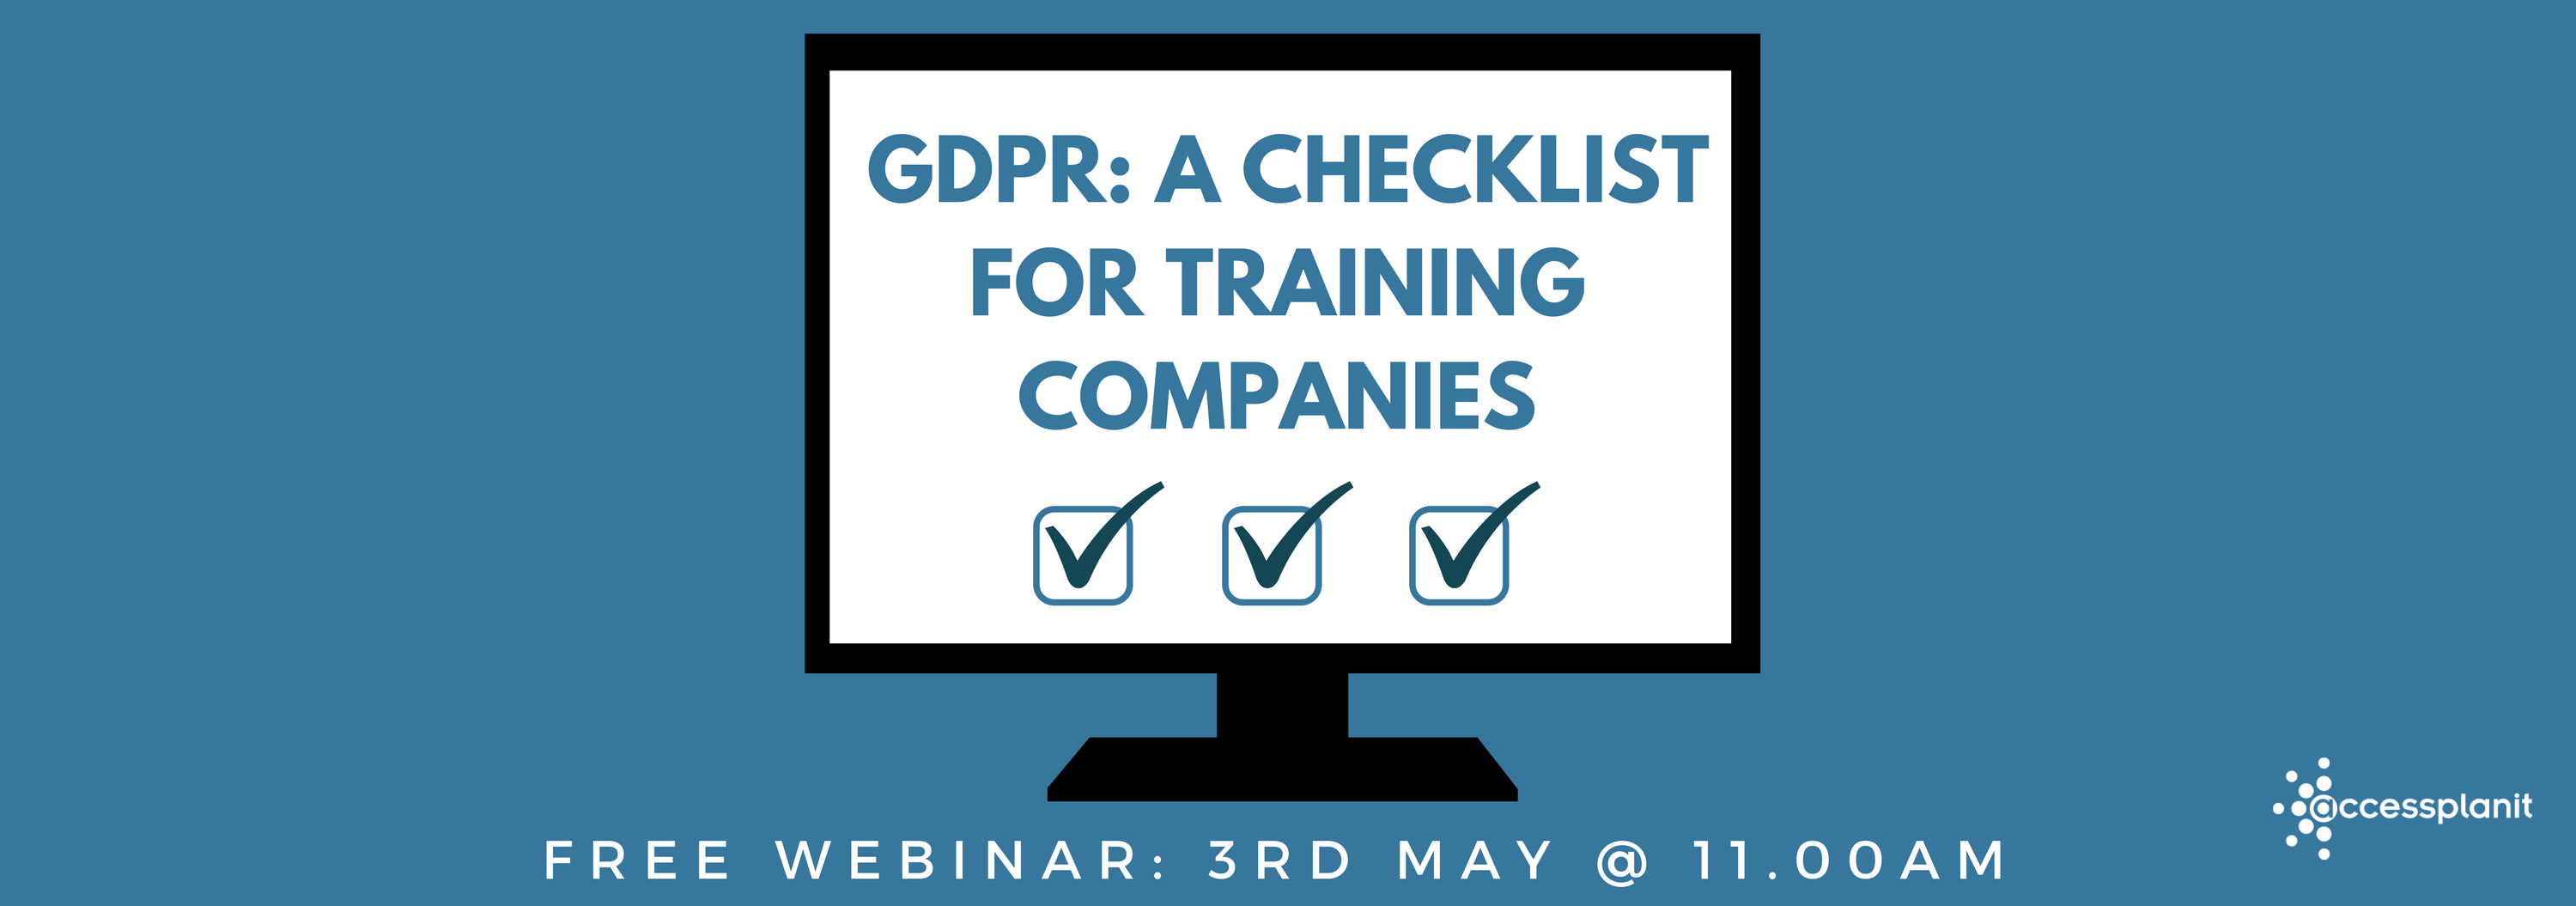 gdpr a checklist for training companies webinar cover image